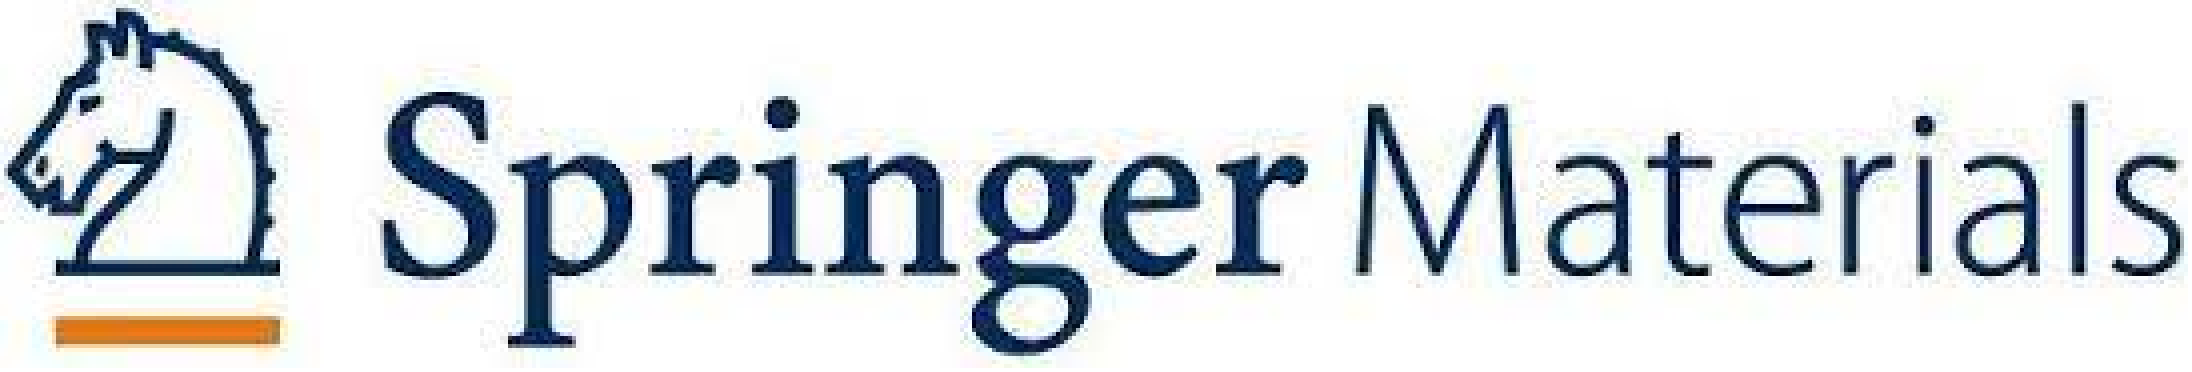 Https link springer com. Шпрингер. Издательство Springer. Springer nature Experiments. Springer Journals издательства Springer nature.